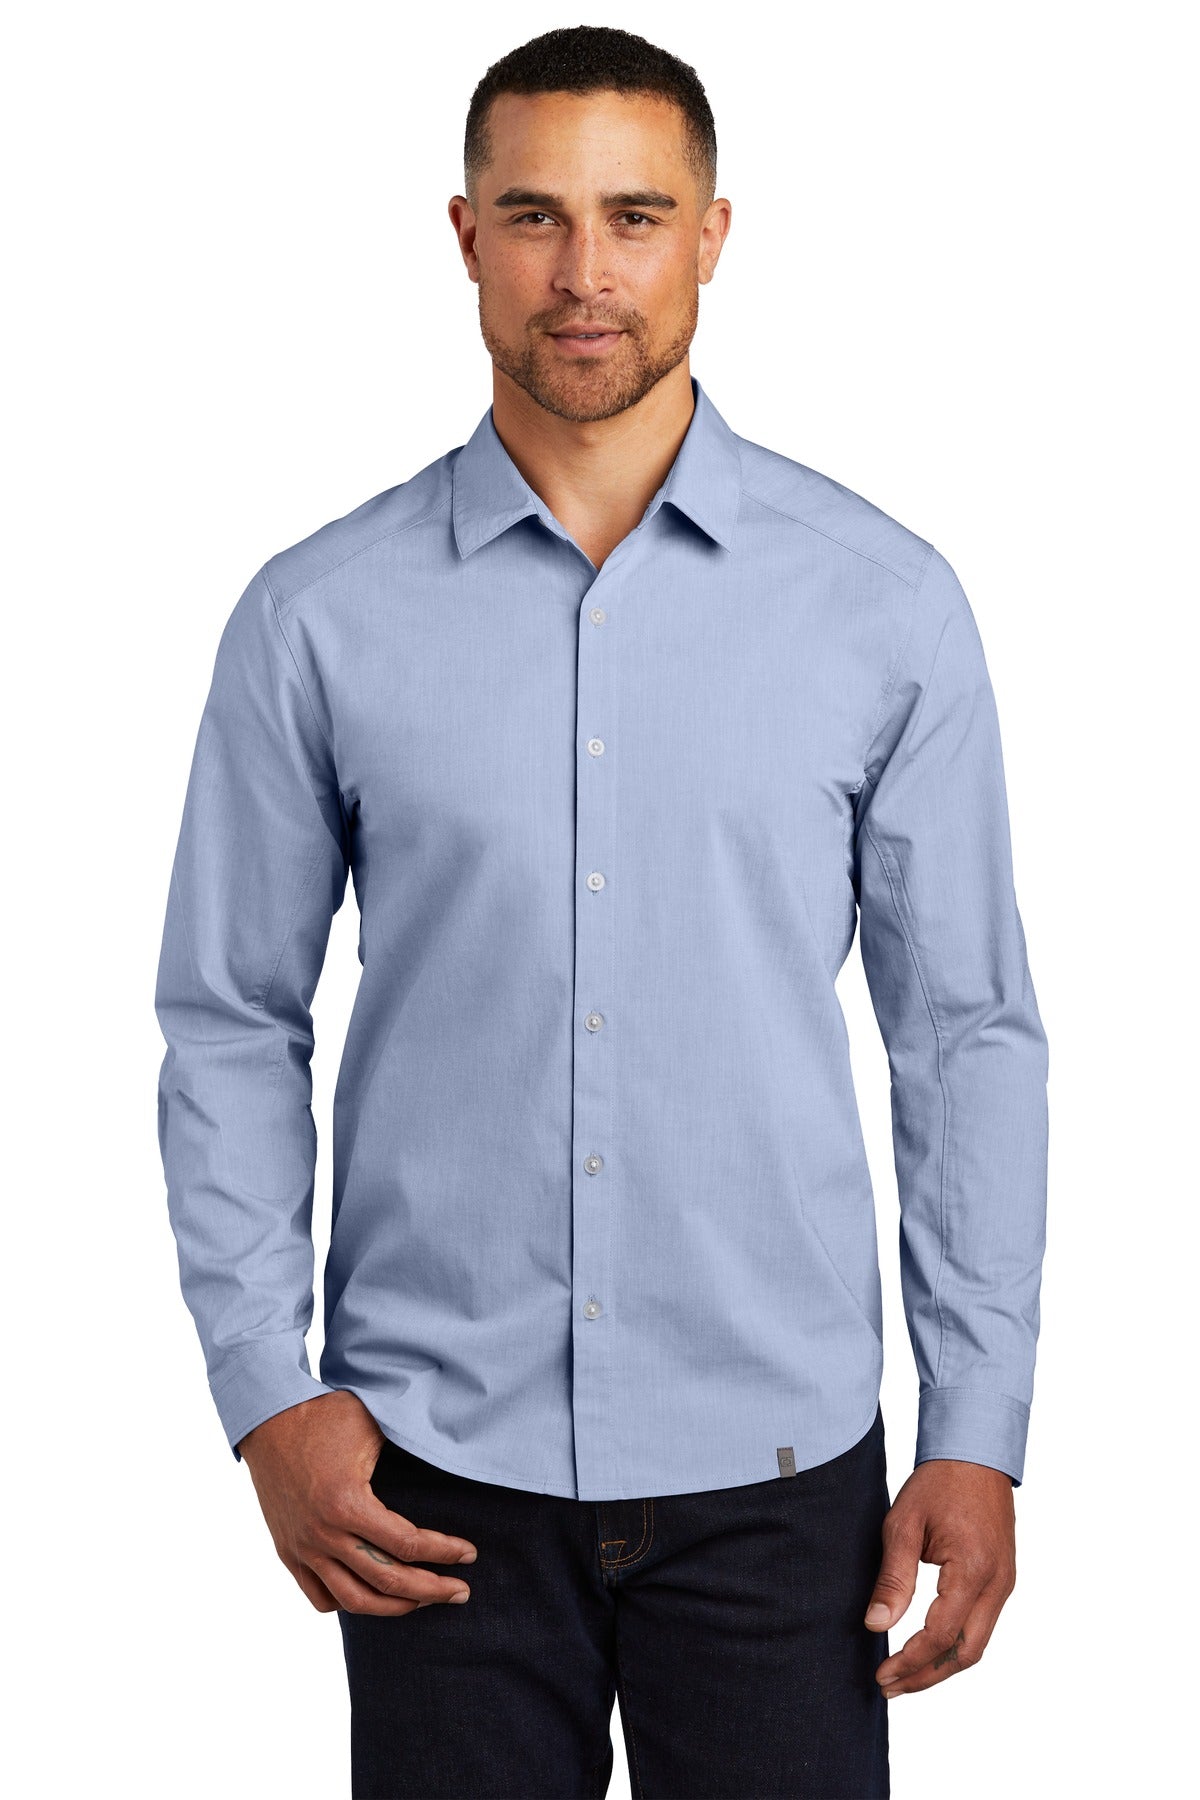 OGIO ® Commuter Woven Shirt. OG1002 - DFW Impression